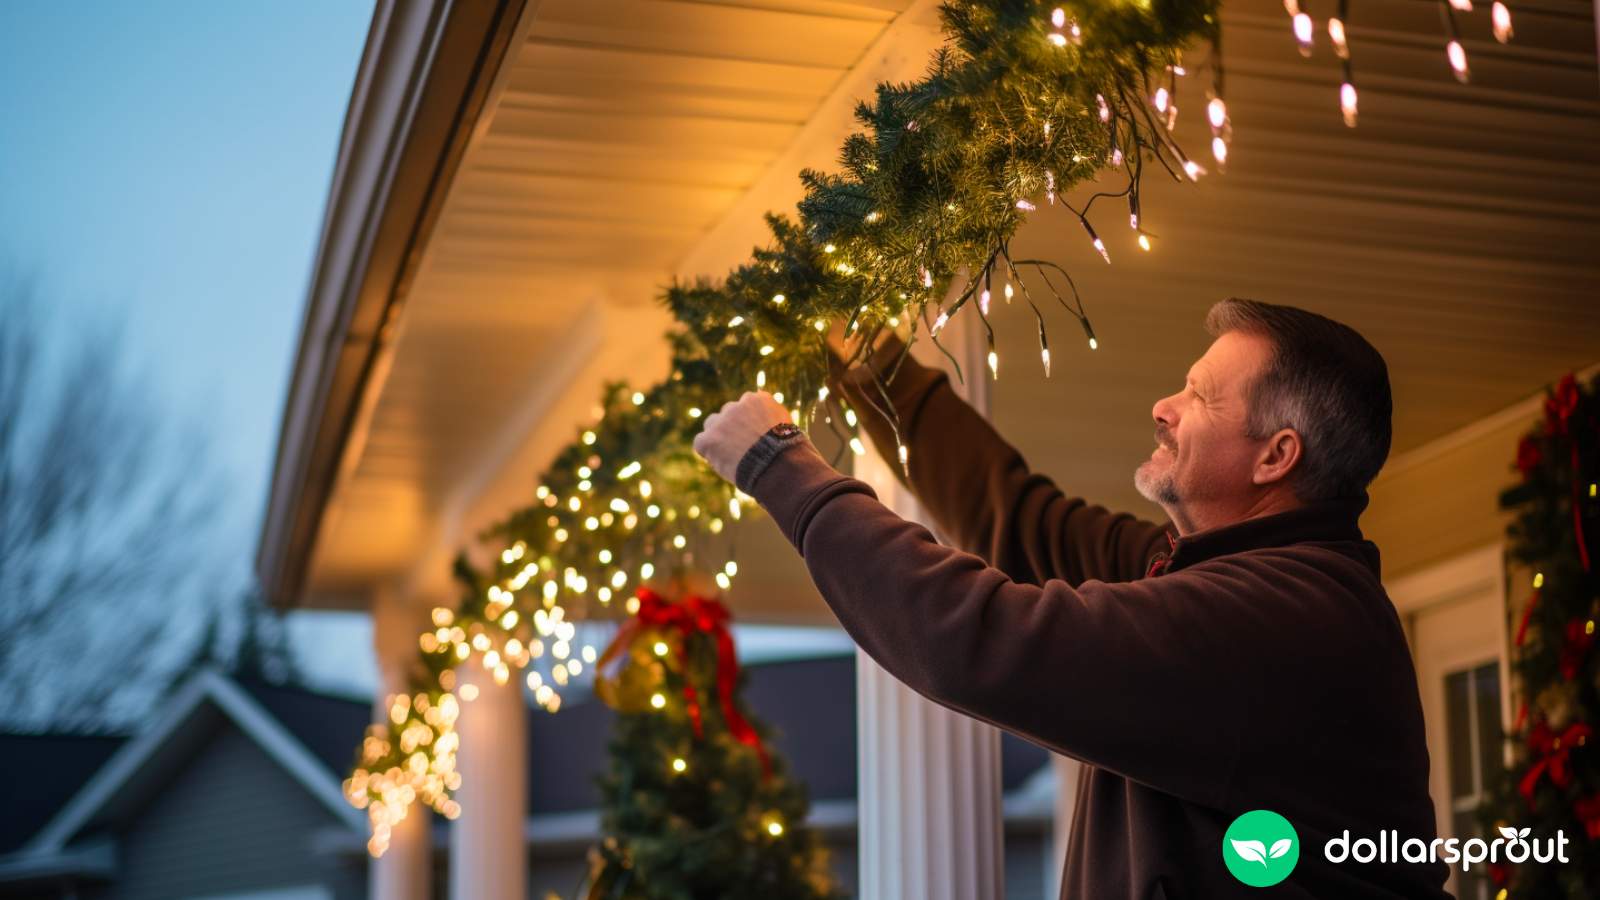 A man hanging up Christmas lights